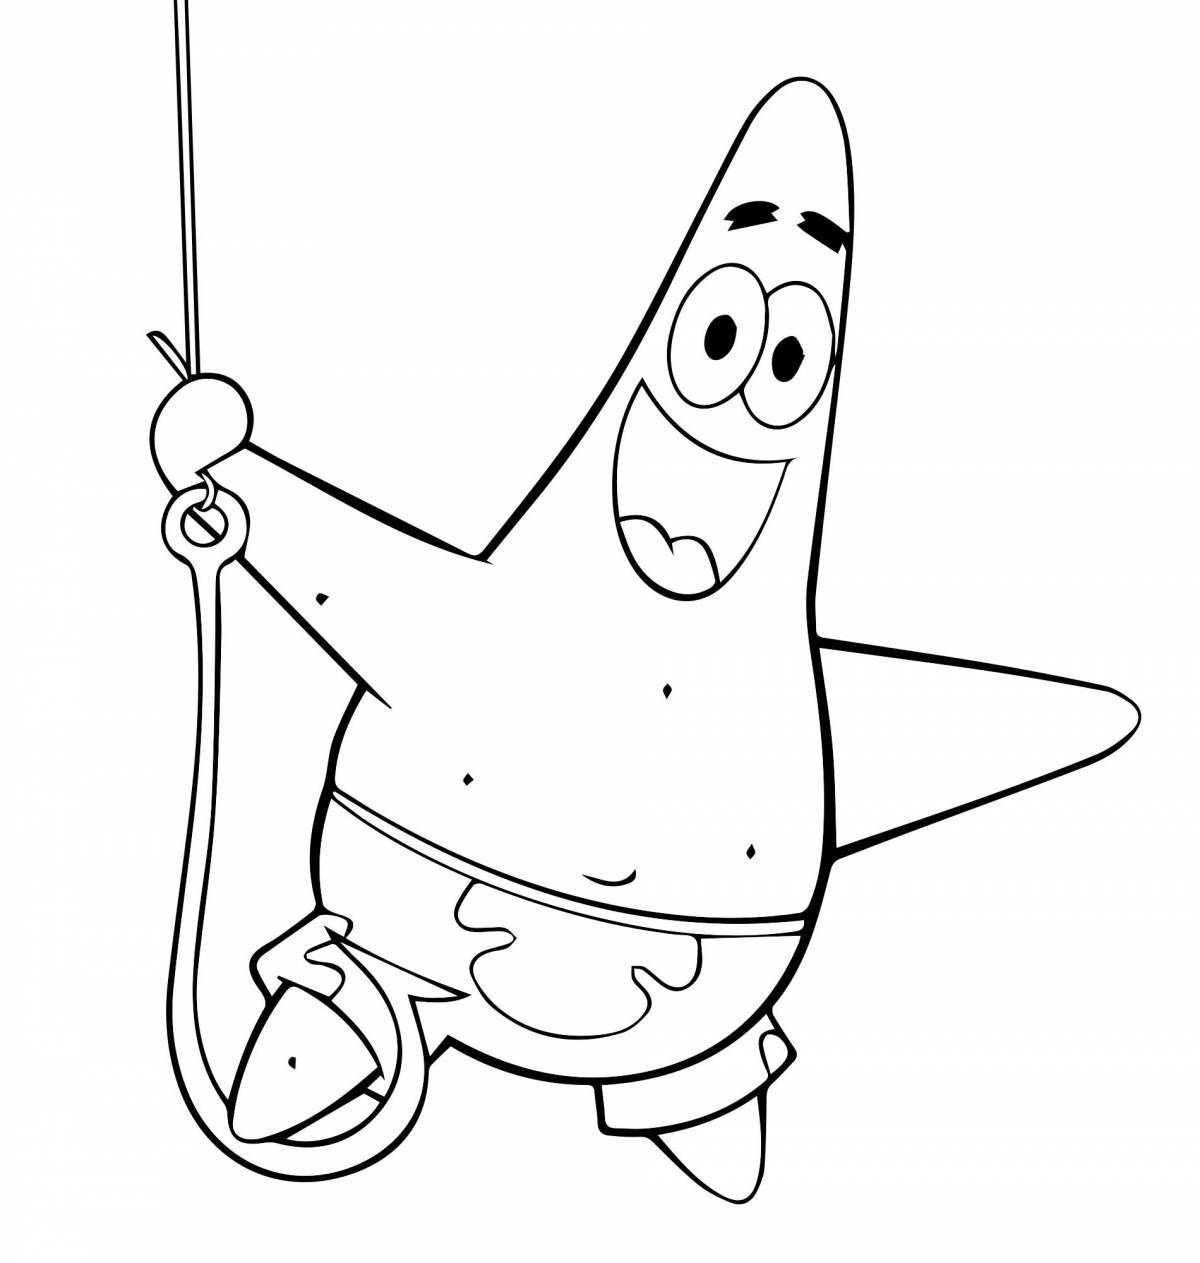 Patrick #4